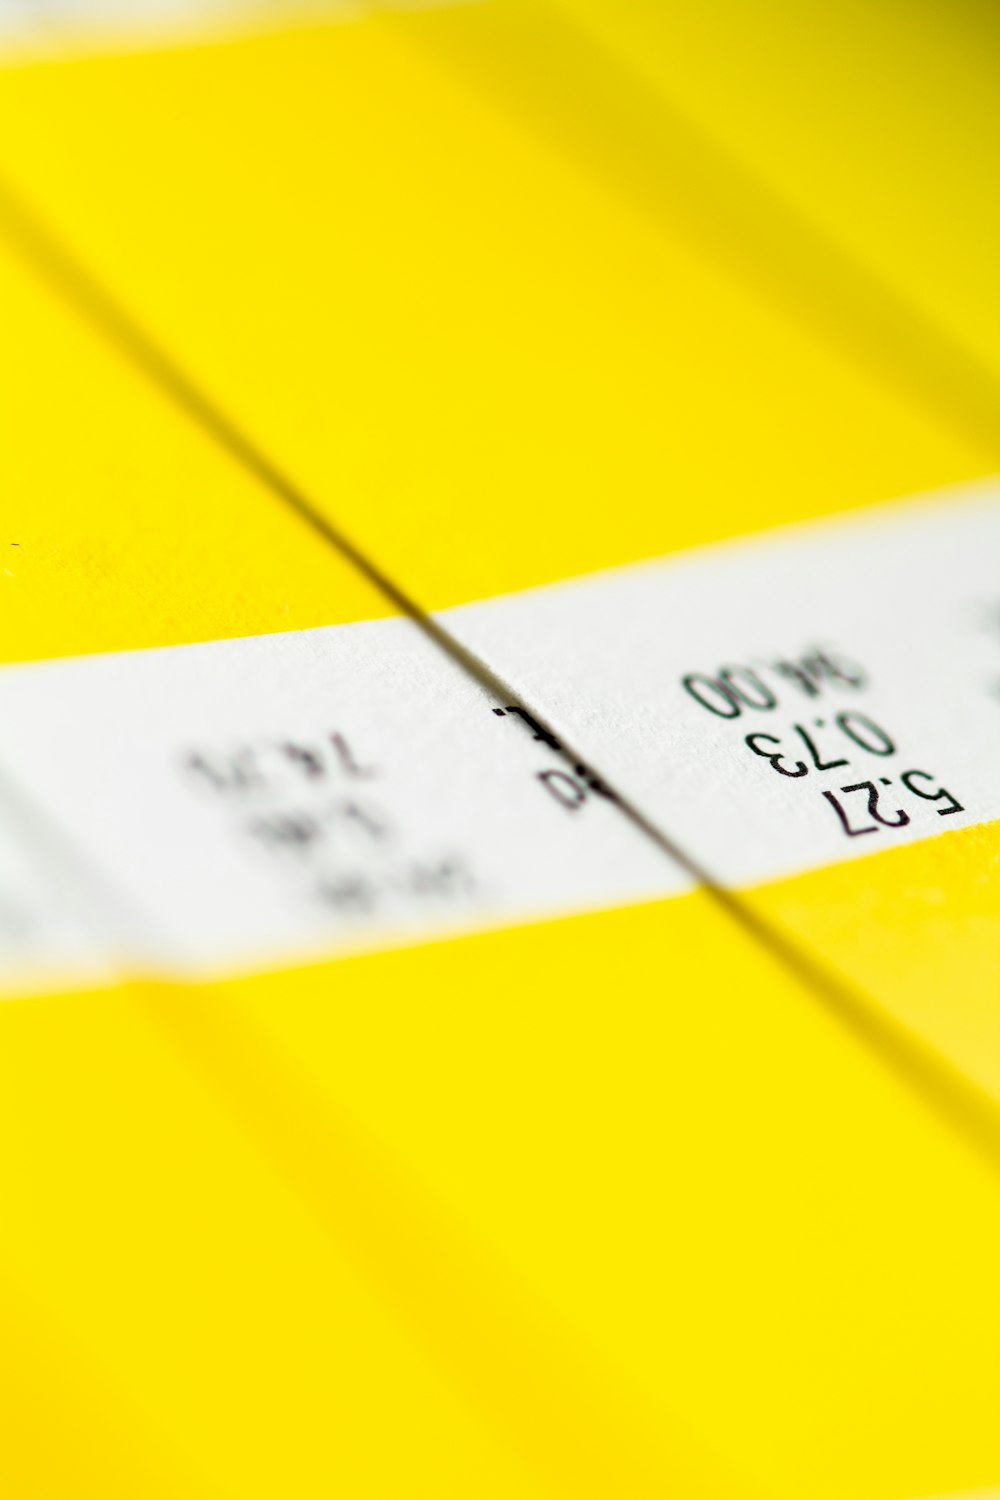 White and yellow printer paper photo – Free Usa Image on Unsplash